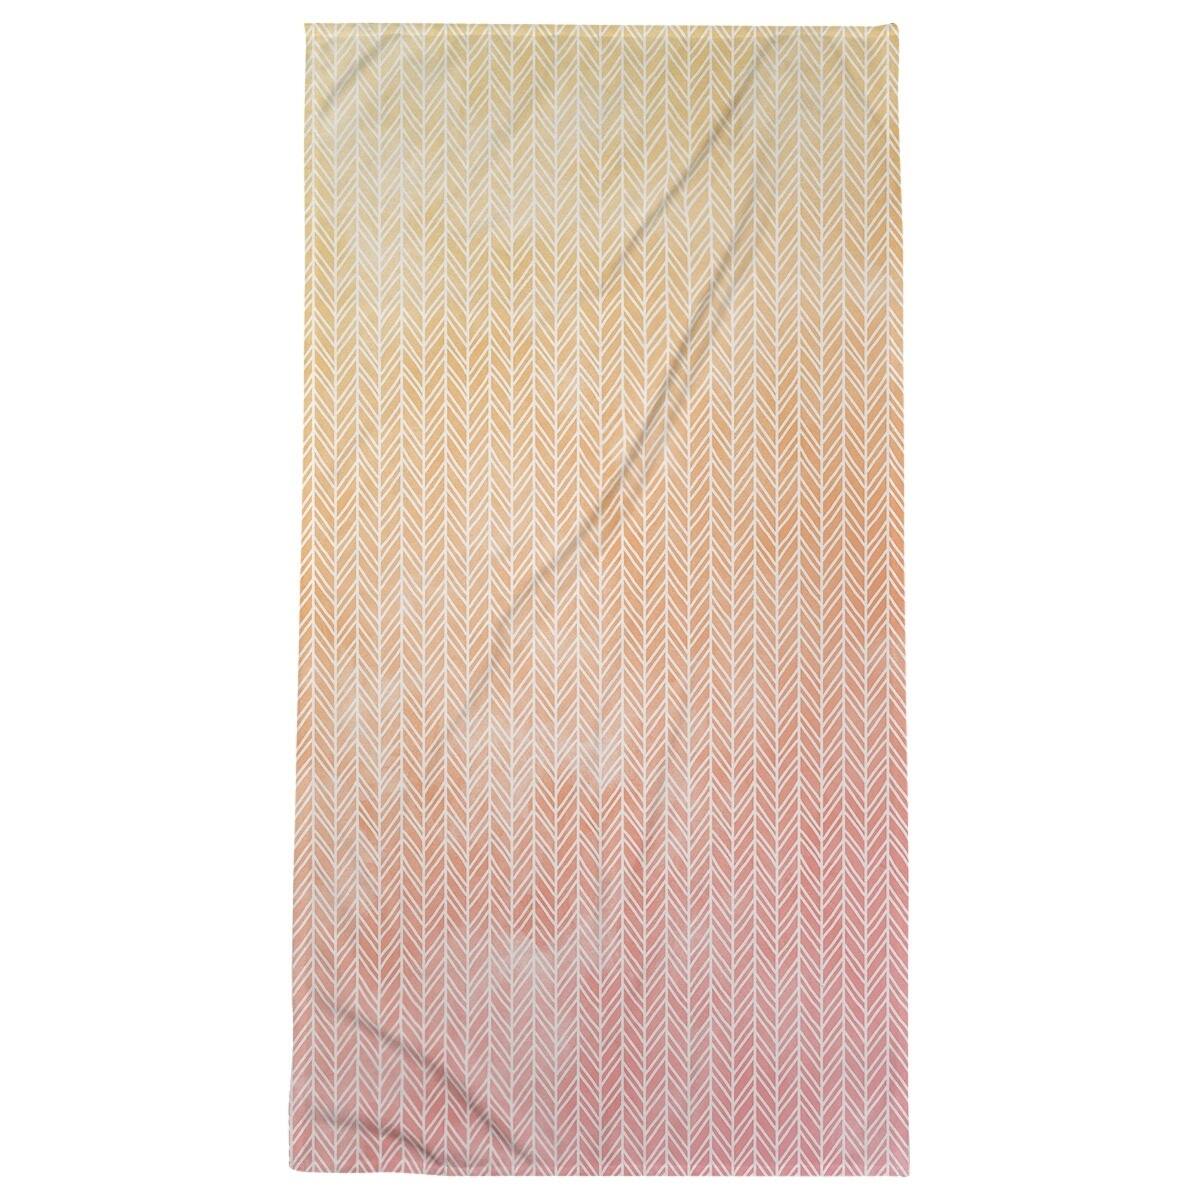 Herringbone Pattern Beach Towel - 36 x 72 - Bed Bath & Beyond - 28497956